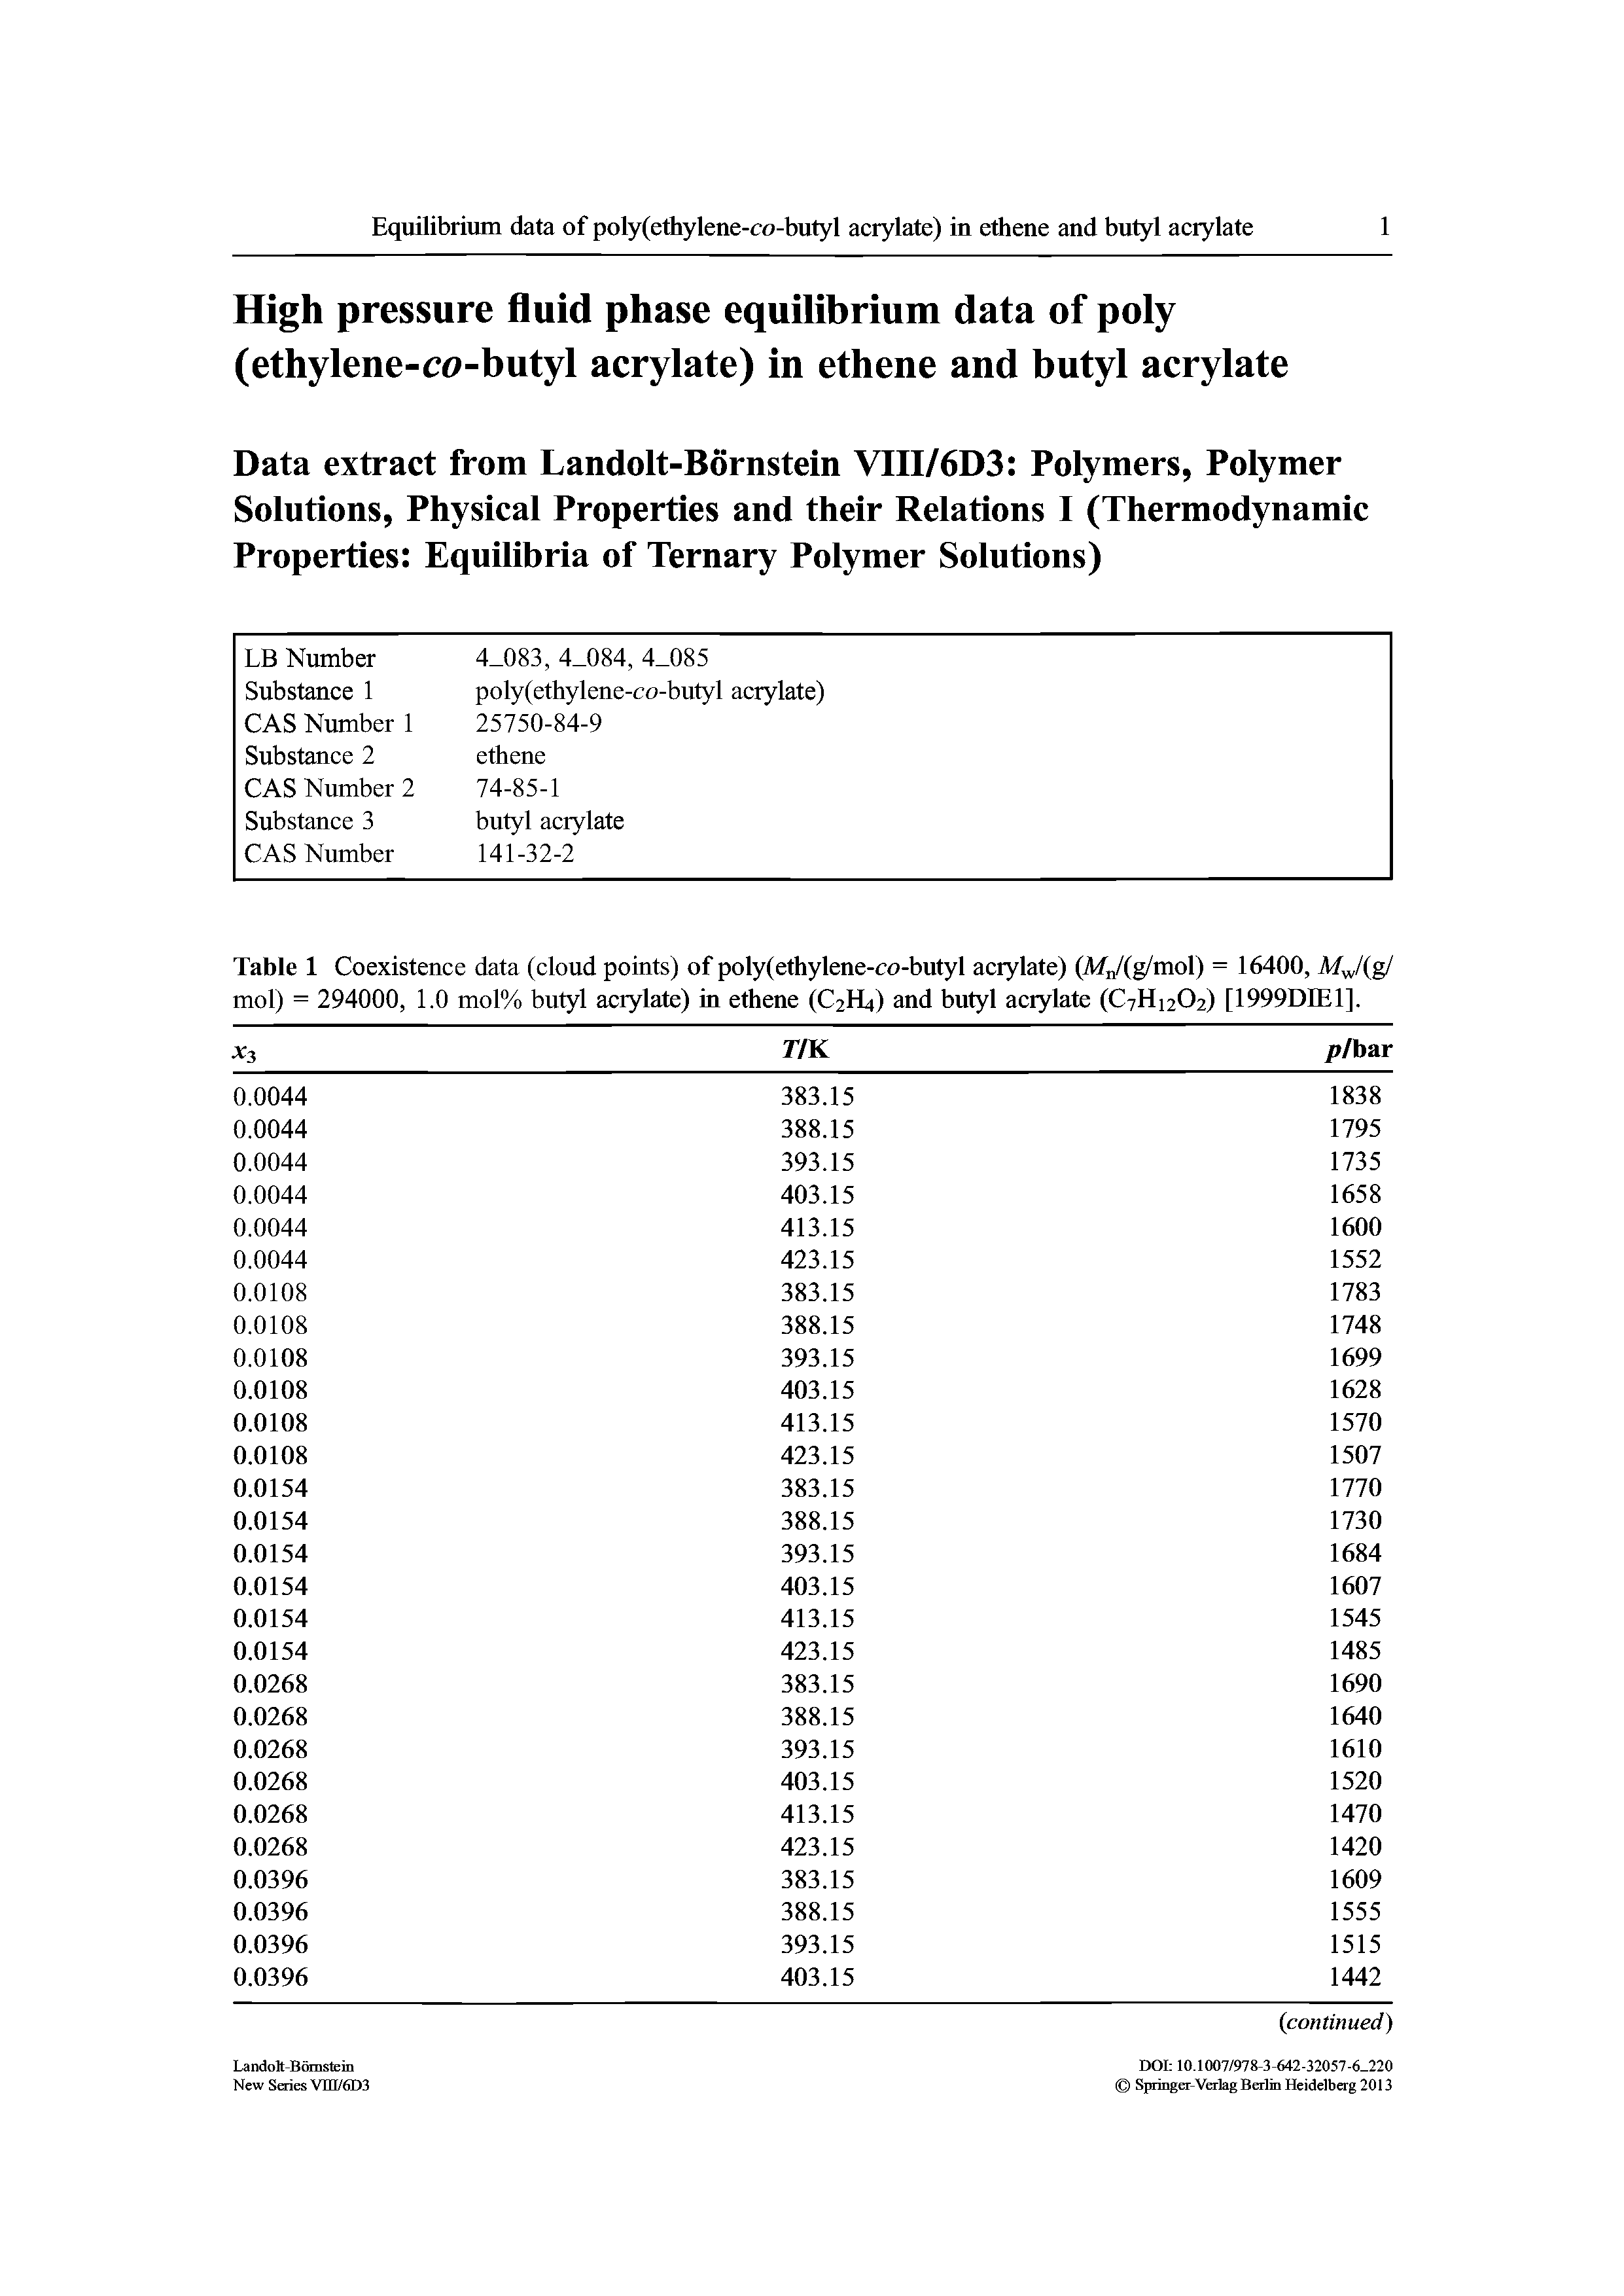 Table 1 Coexistence data (cloud points) of poly(ethylene-co-butyl acrylate) (M /(g/mol) = 16400, MJ( / mol) = 294000, 1.0 mol% butyl acrylate) in ethene (C2H4) and butyl acrylate (C7H12O2) [1999DIE1].